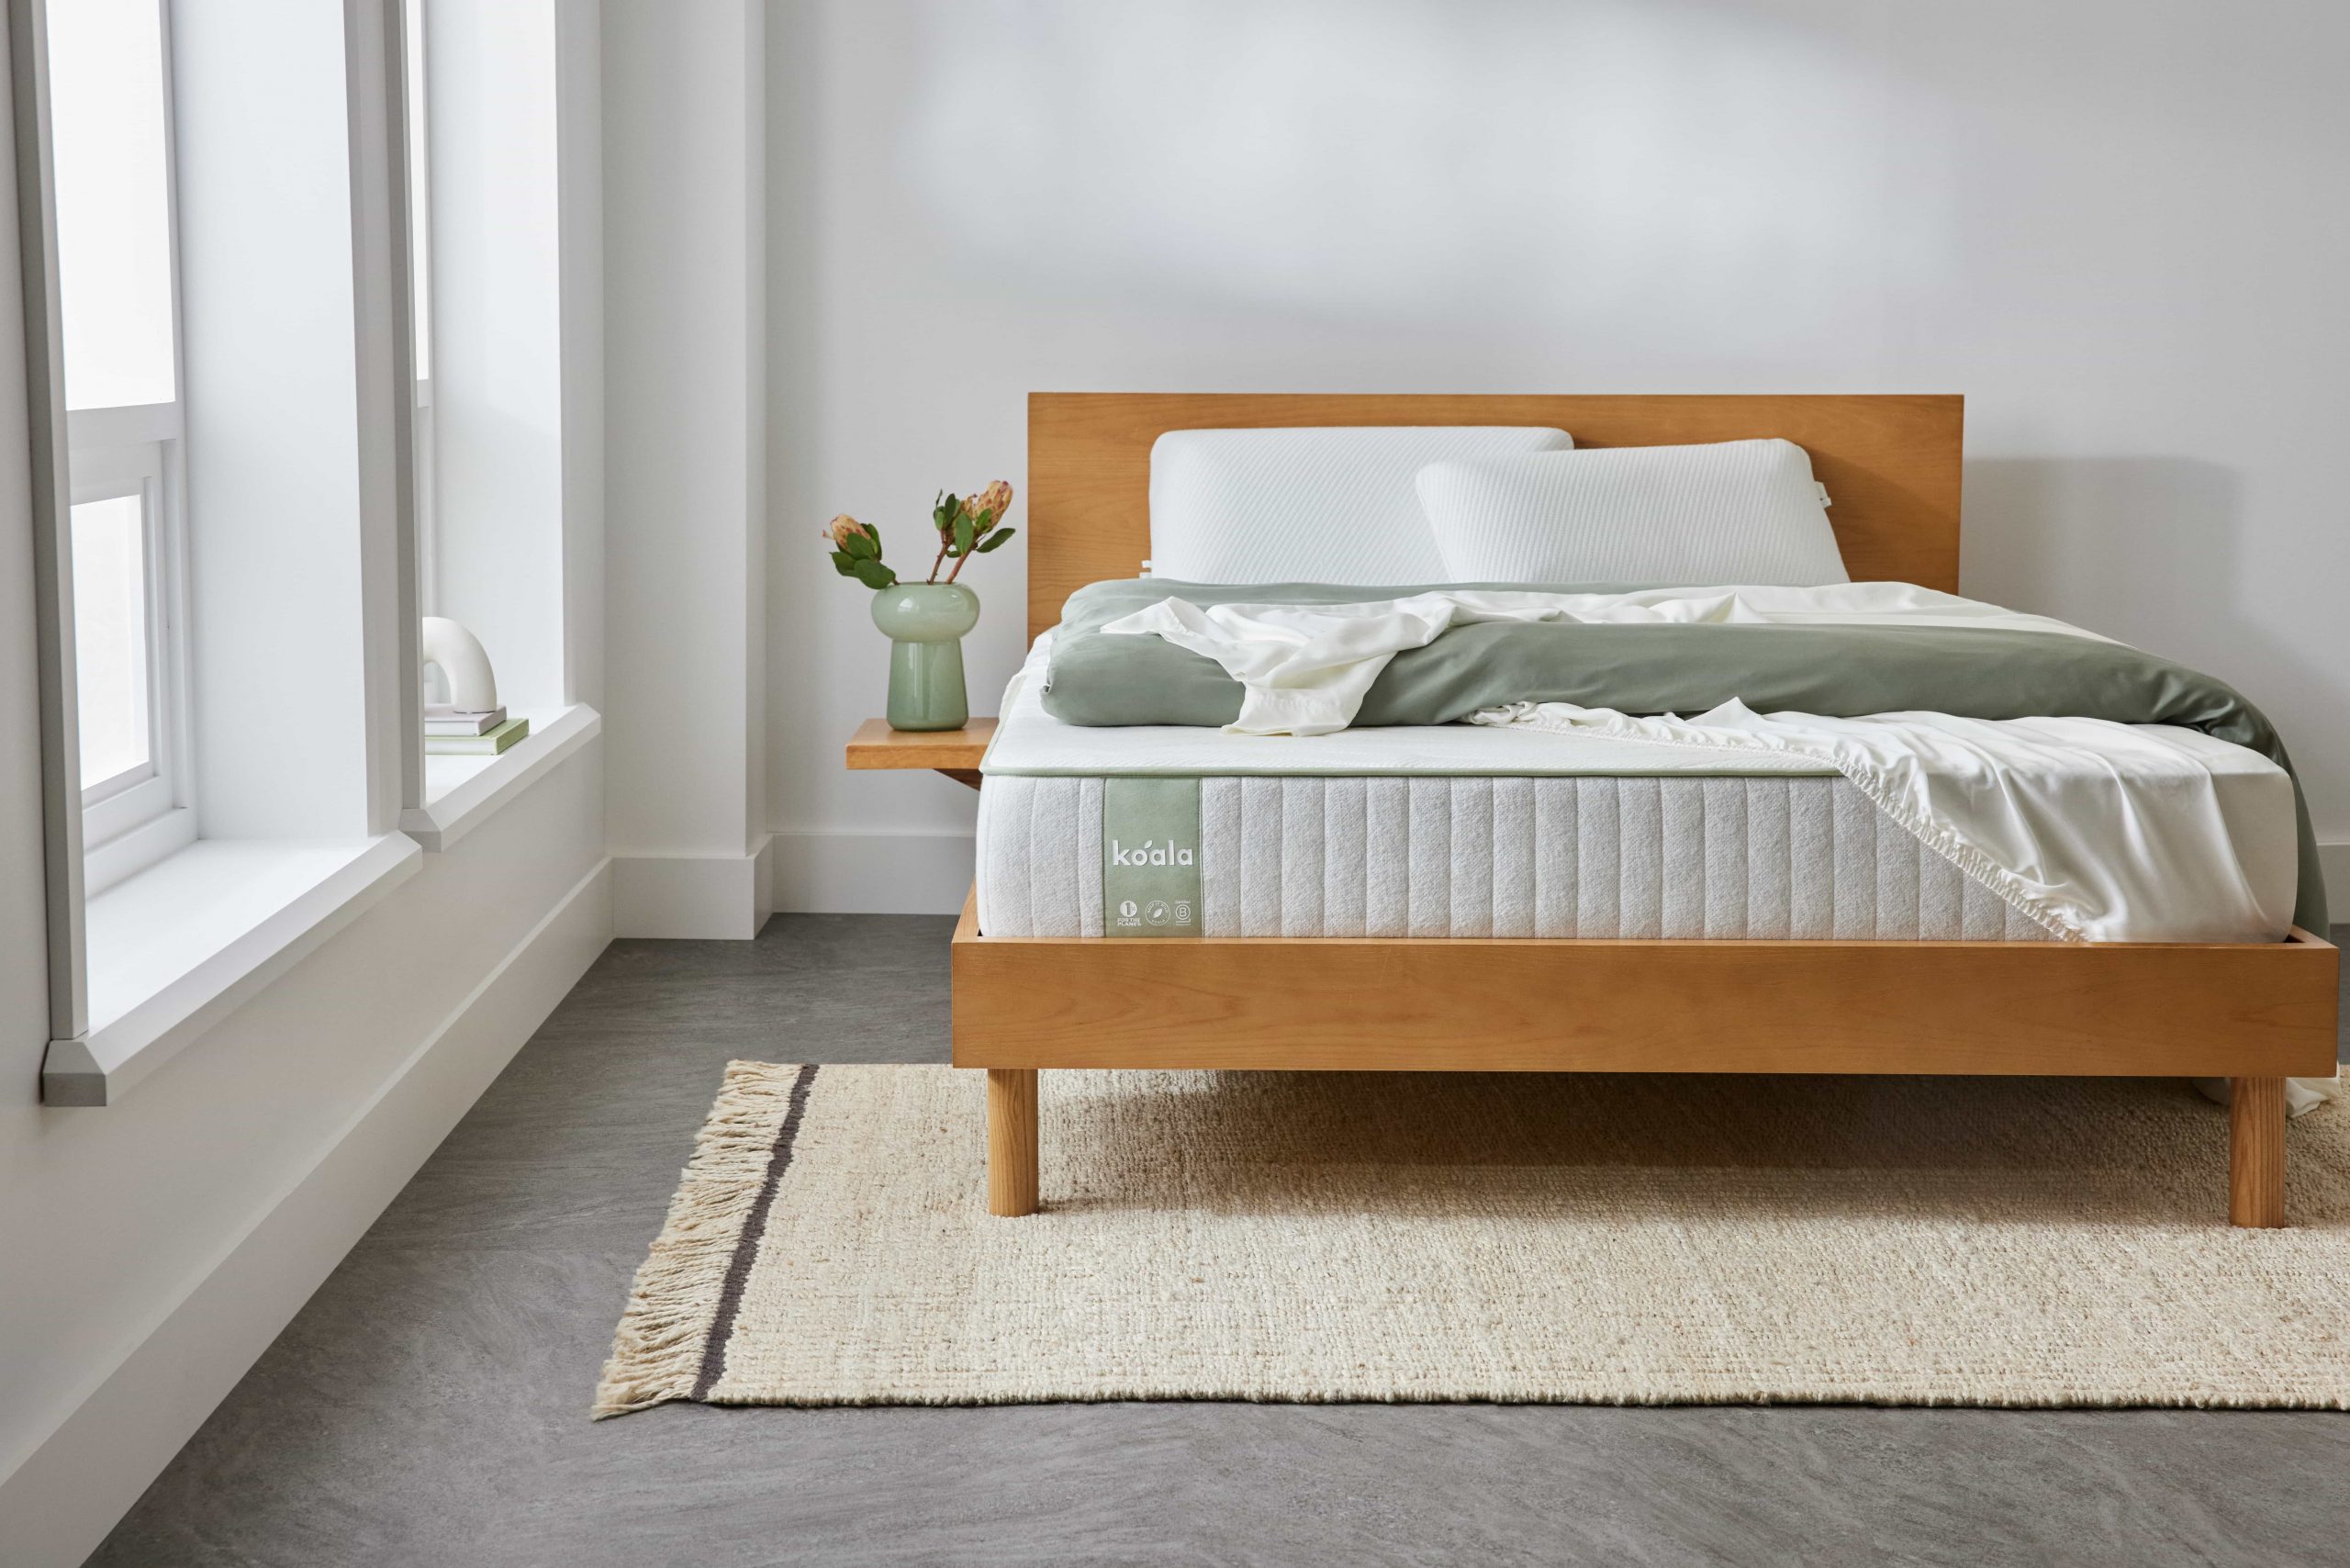 A real bedroom essential - a budget friendly mattress